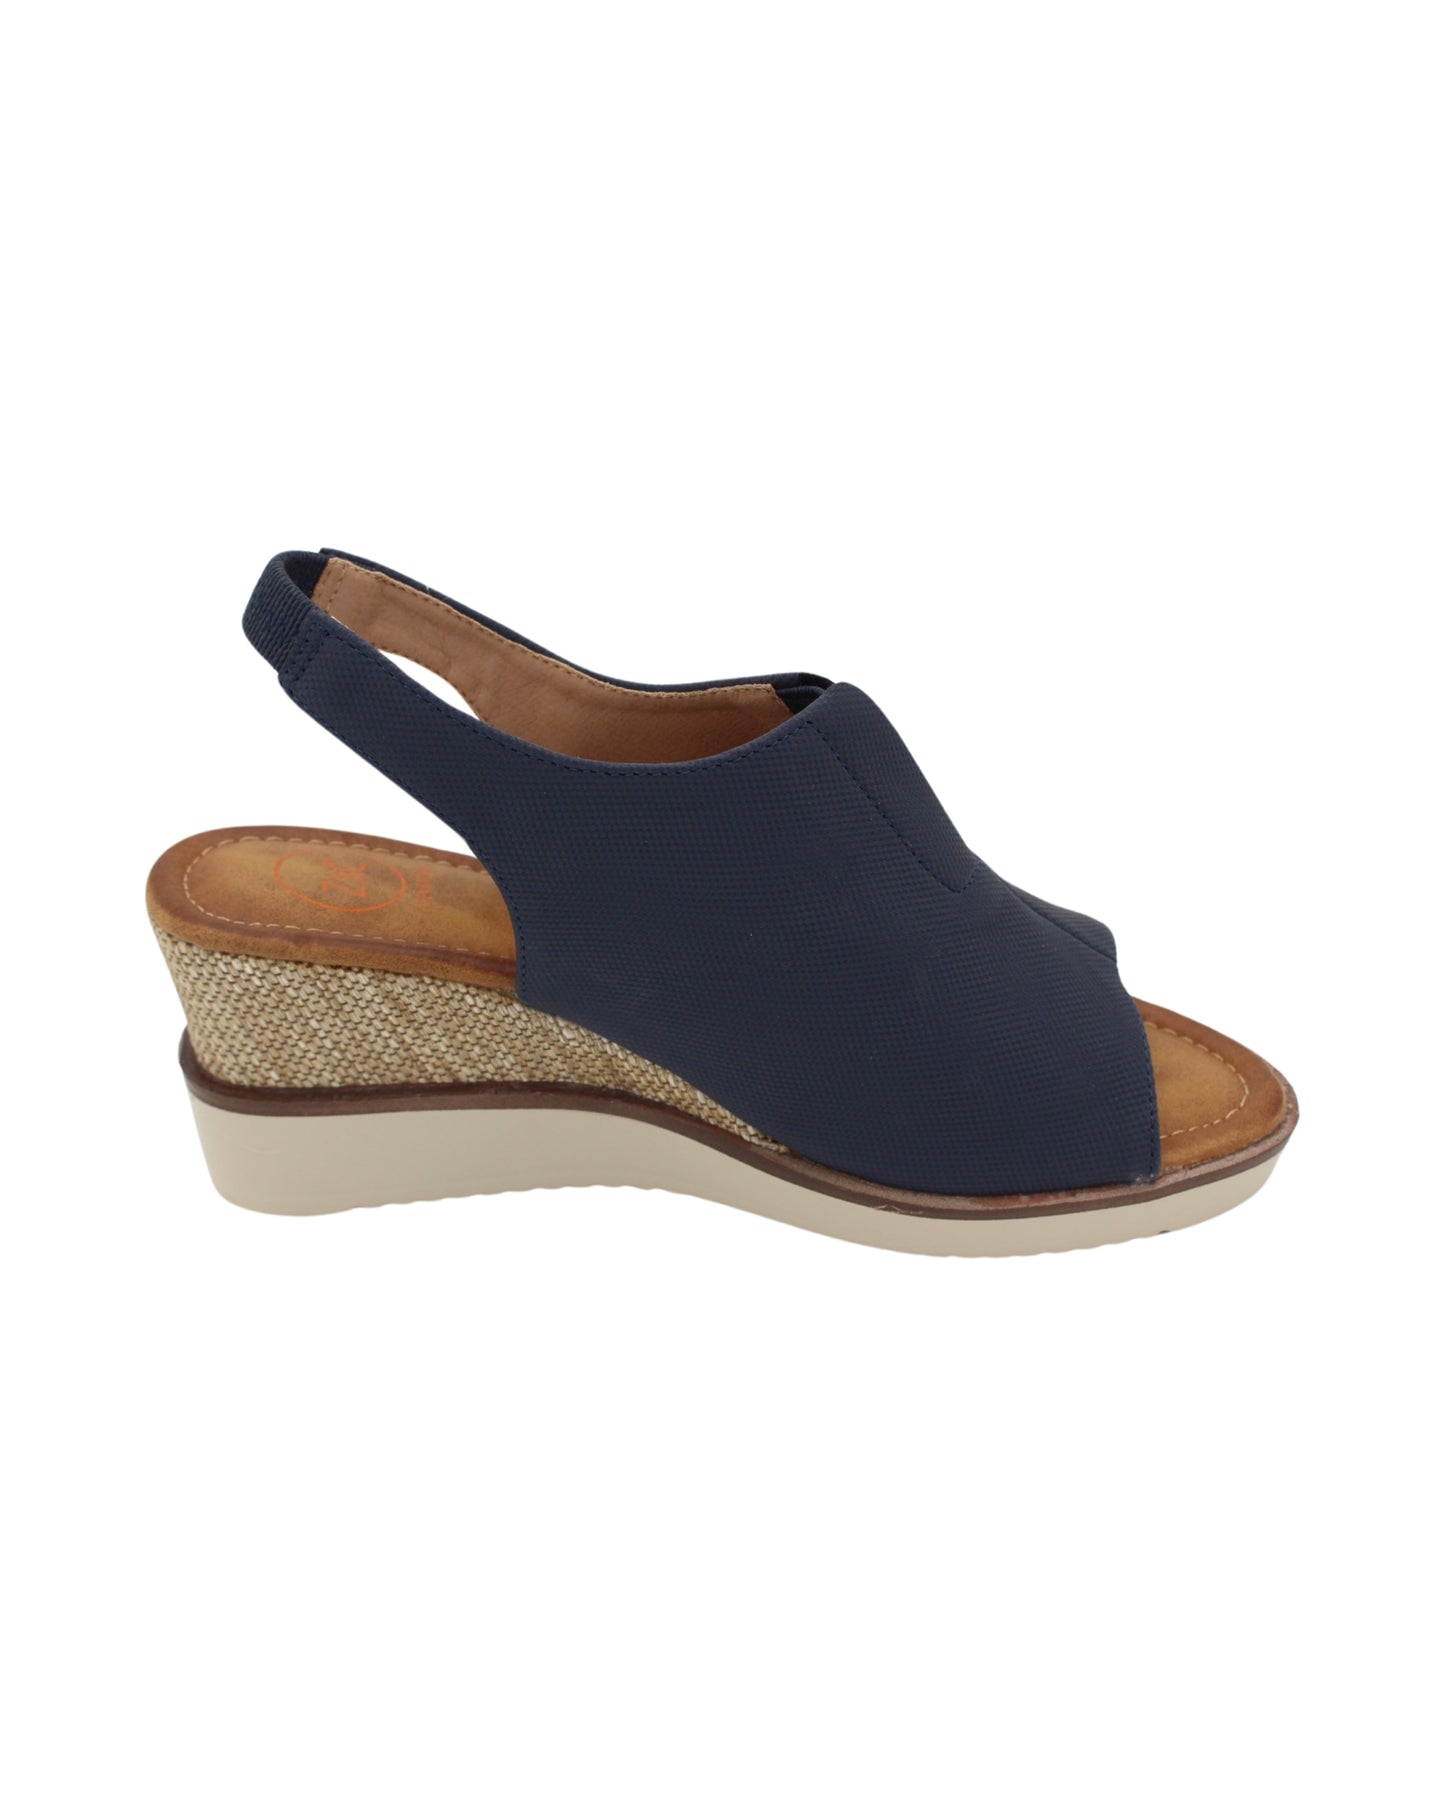 Zanni - Ladies Shoes Sandals Navy (2138)